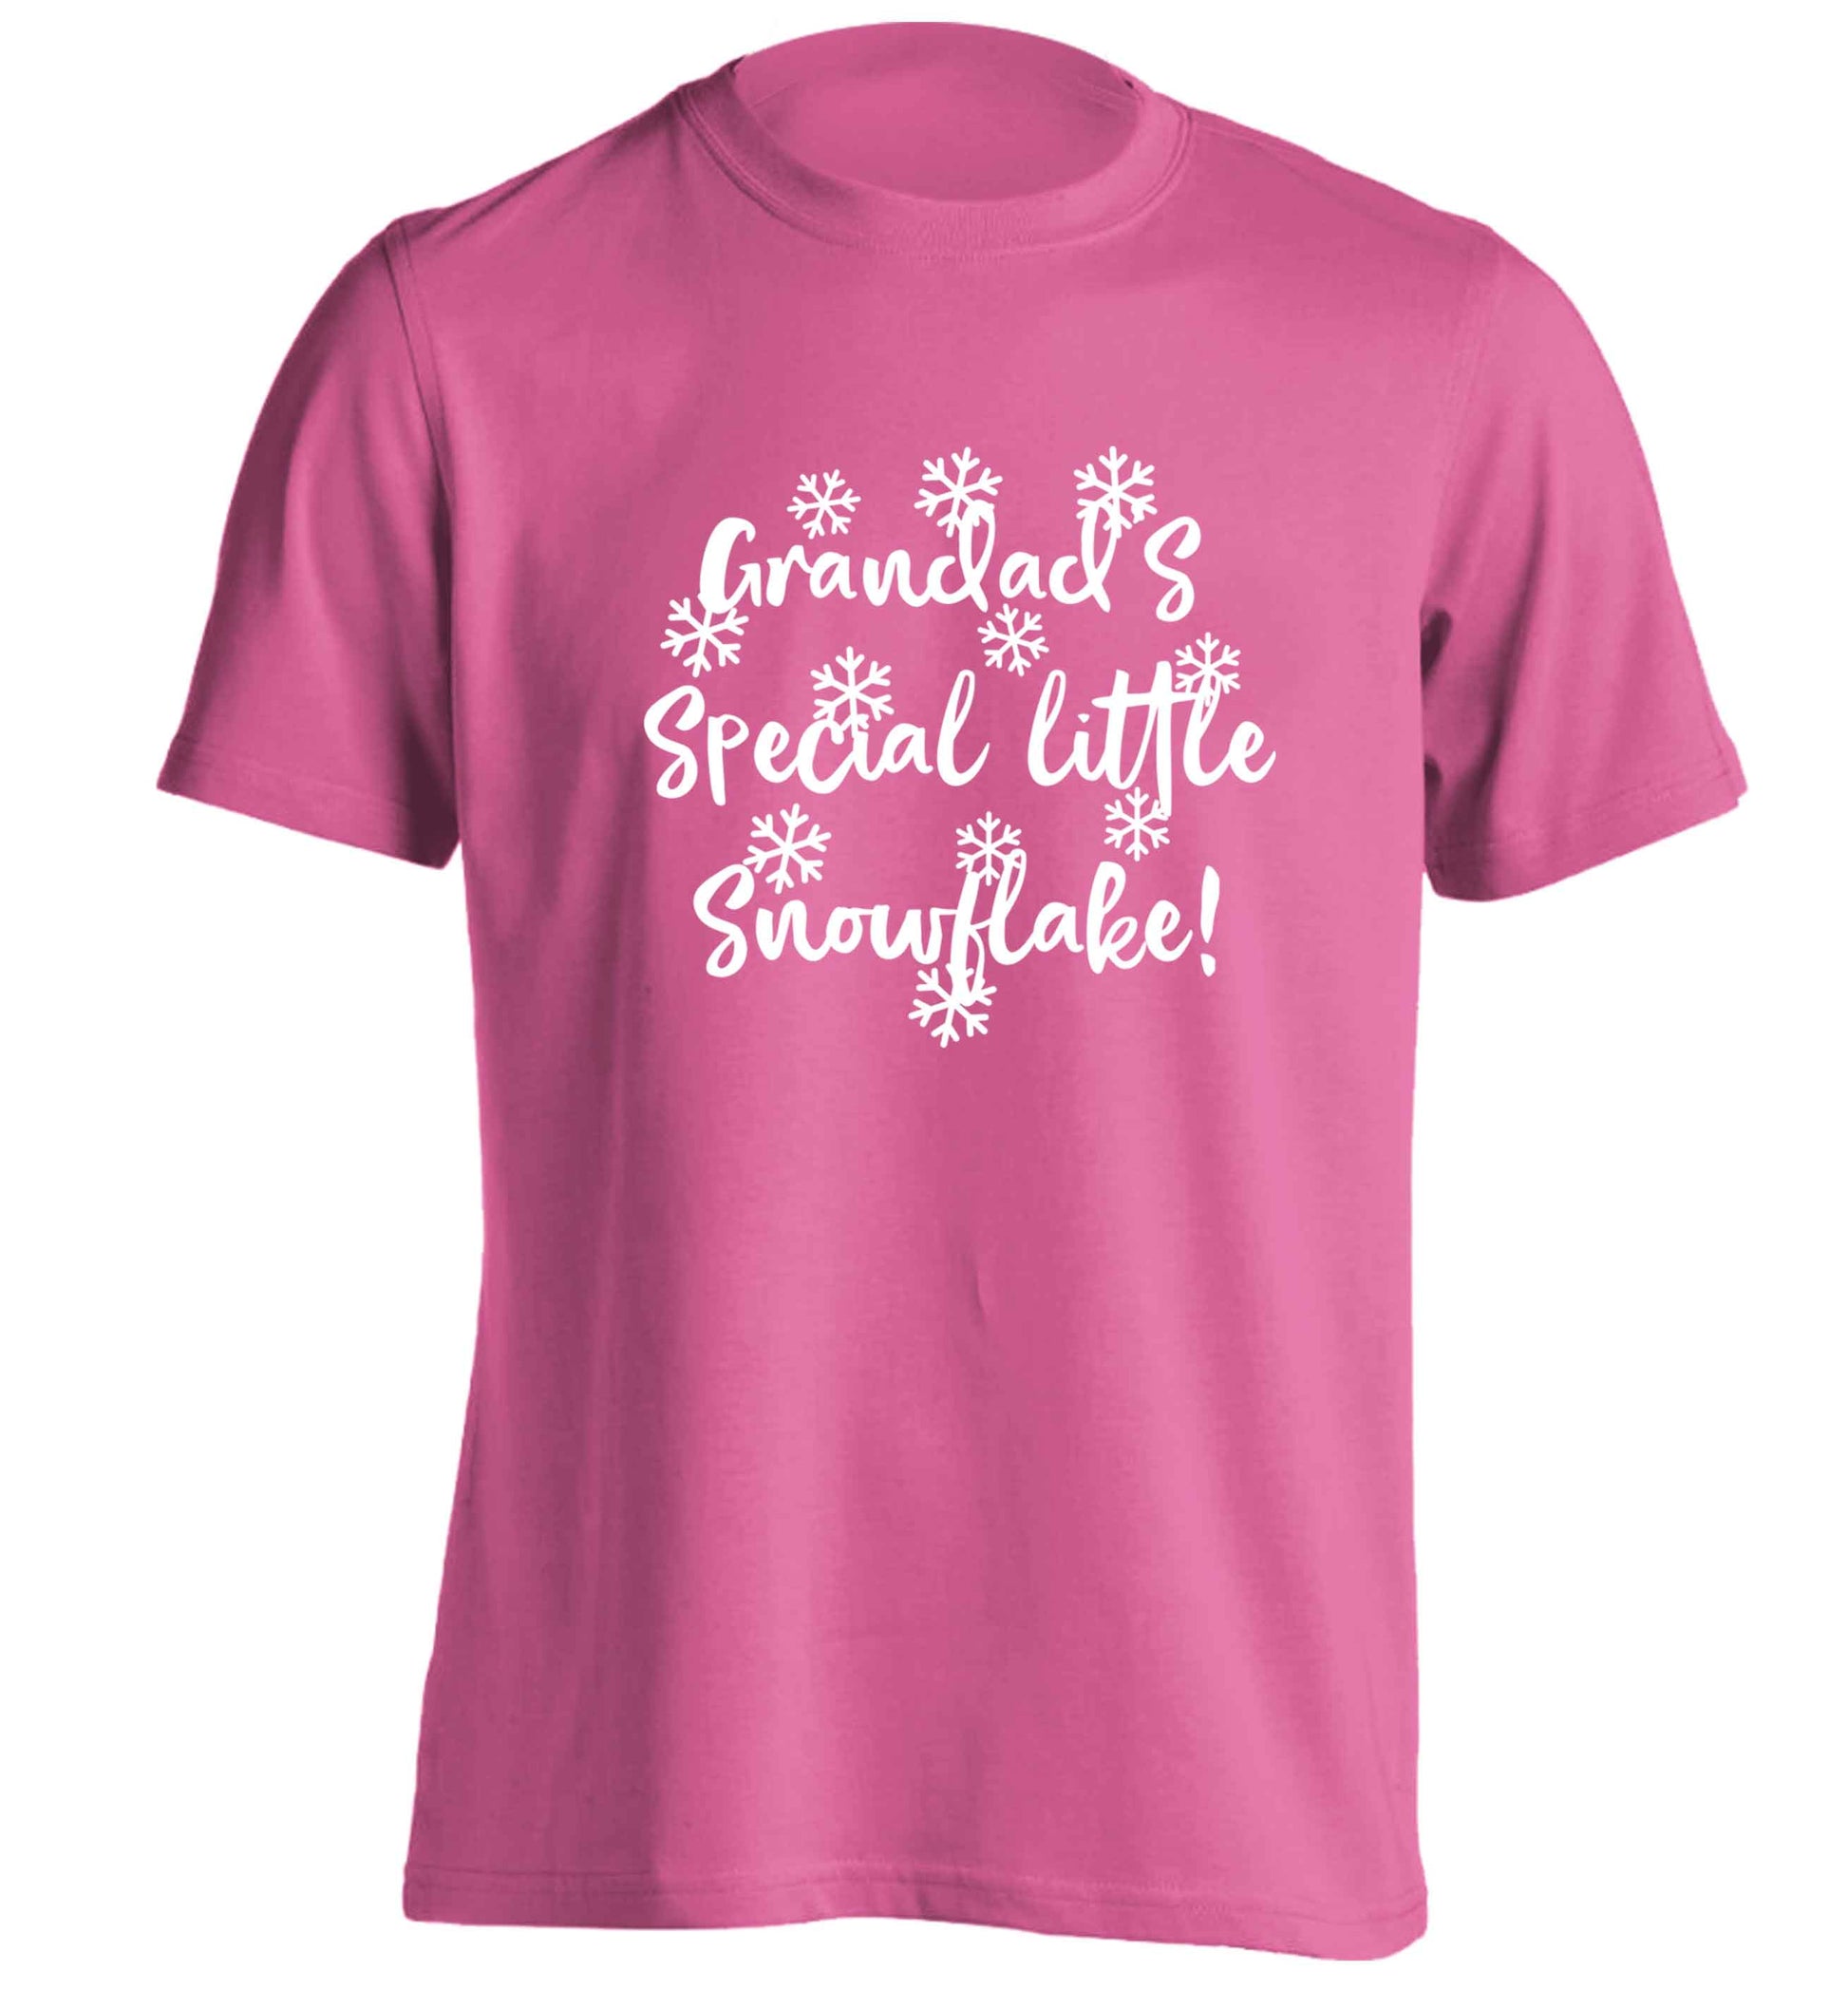 Grandad's special little snowflake adults unisex pink Tshirt 2XL